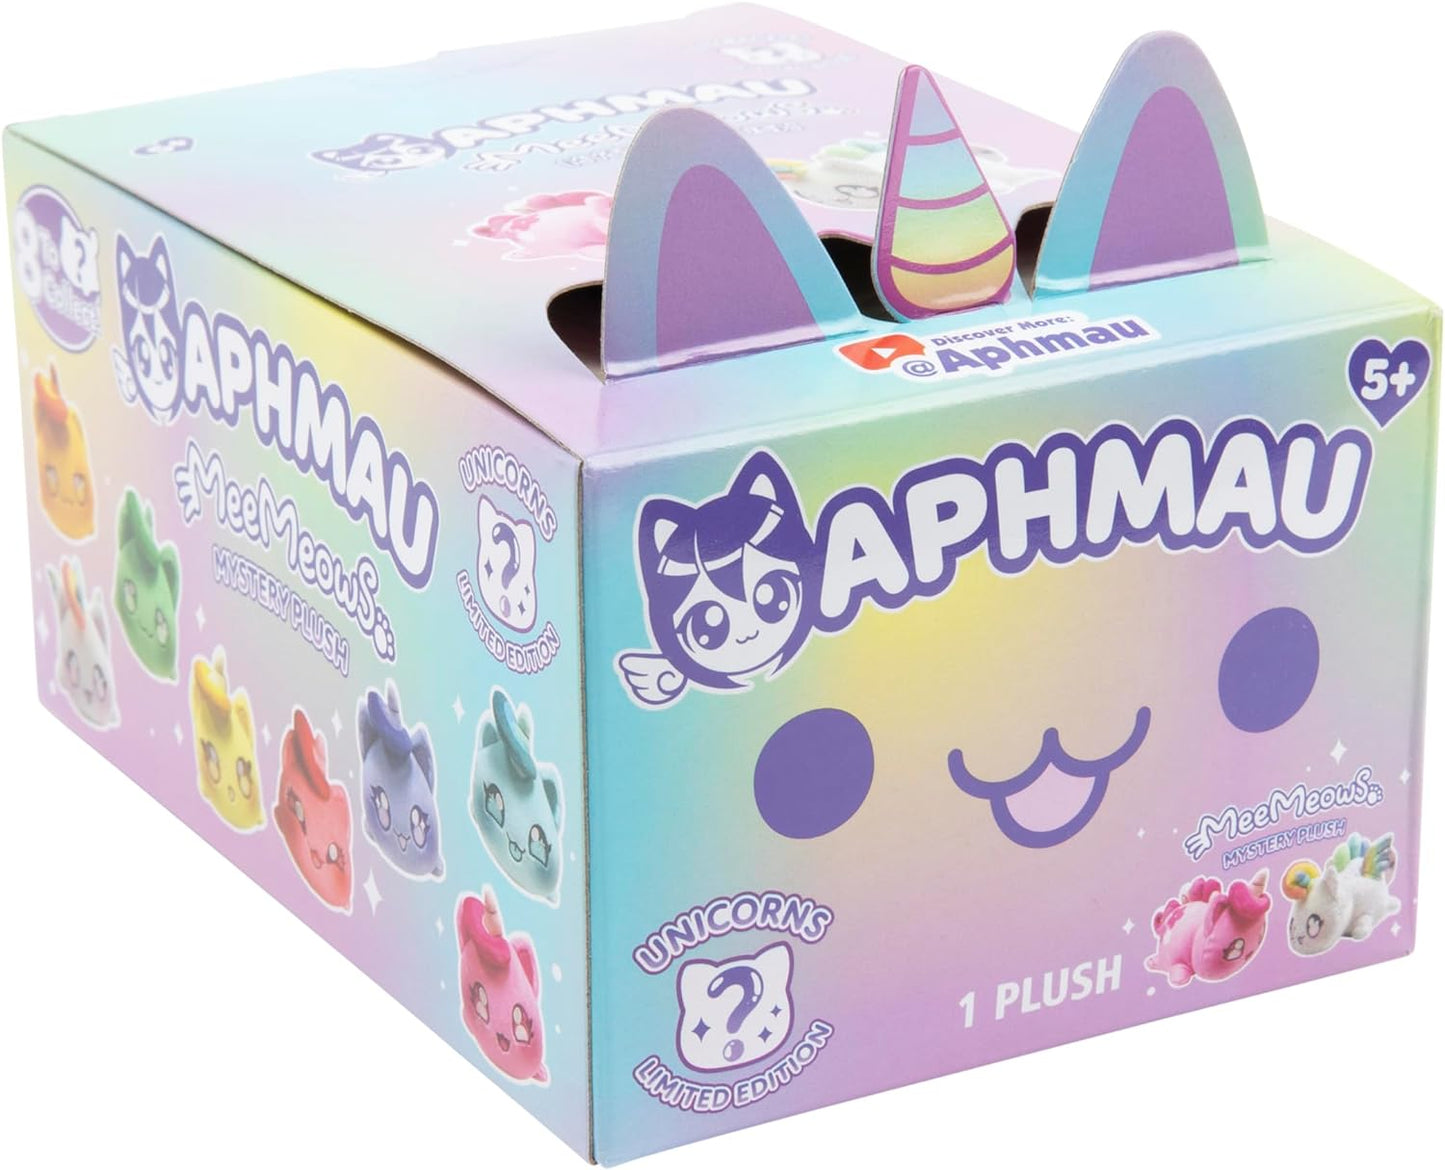 PURPLE UNICORN CAT - MeeMeows Limited Edition Aphmau Plush (NEW) RARE Kitty Toy